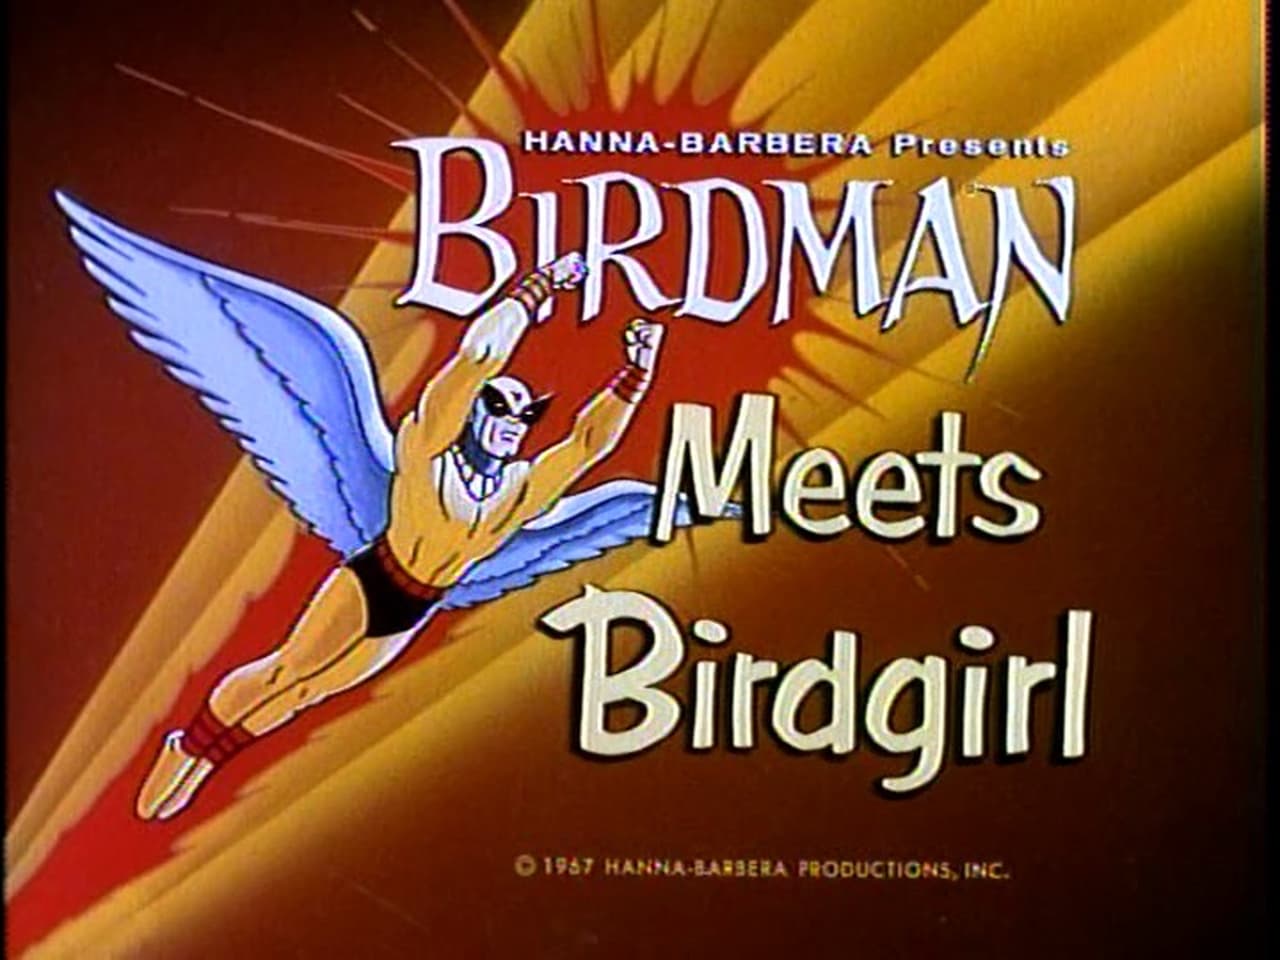 Birdman Meets Birdgirl